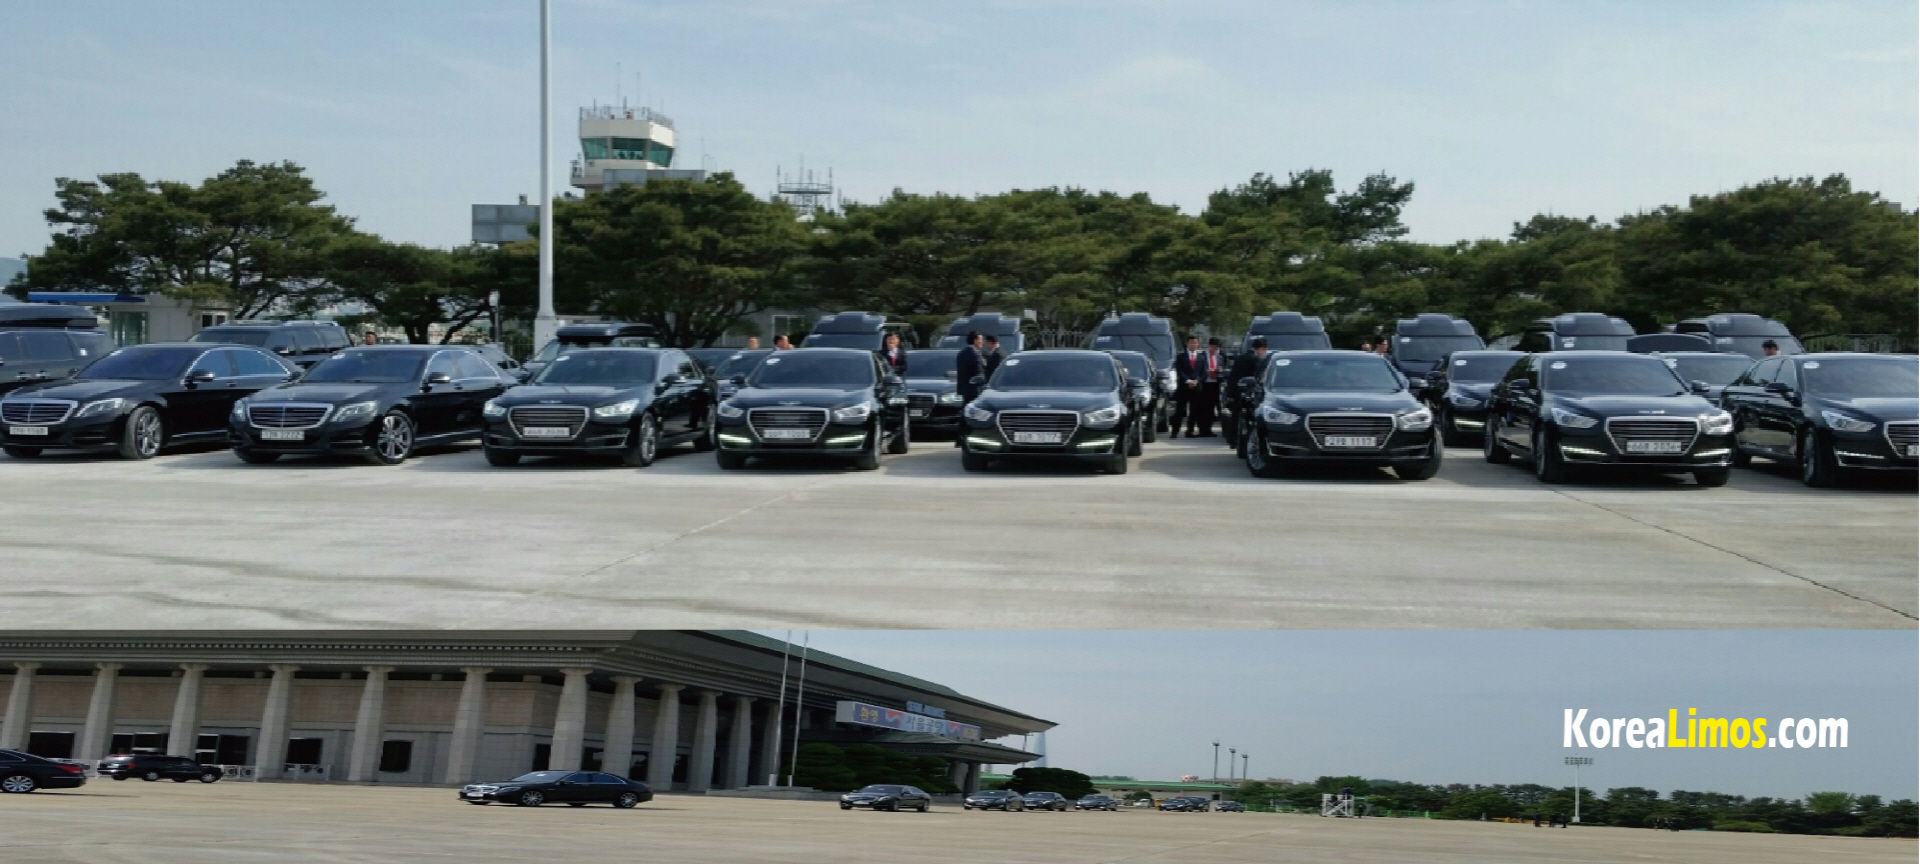 Korea Luxury car rental with driver